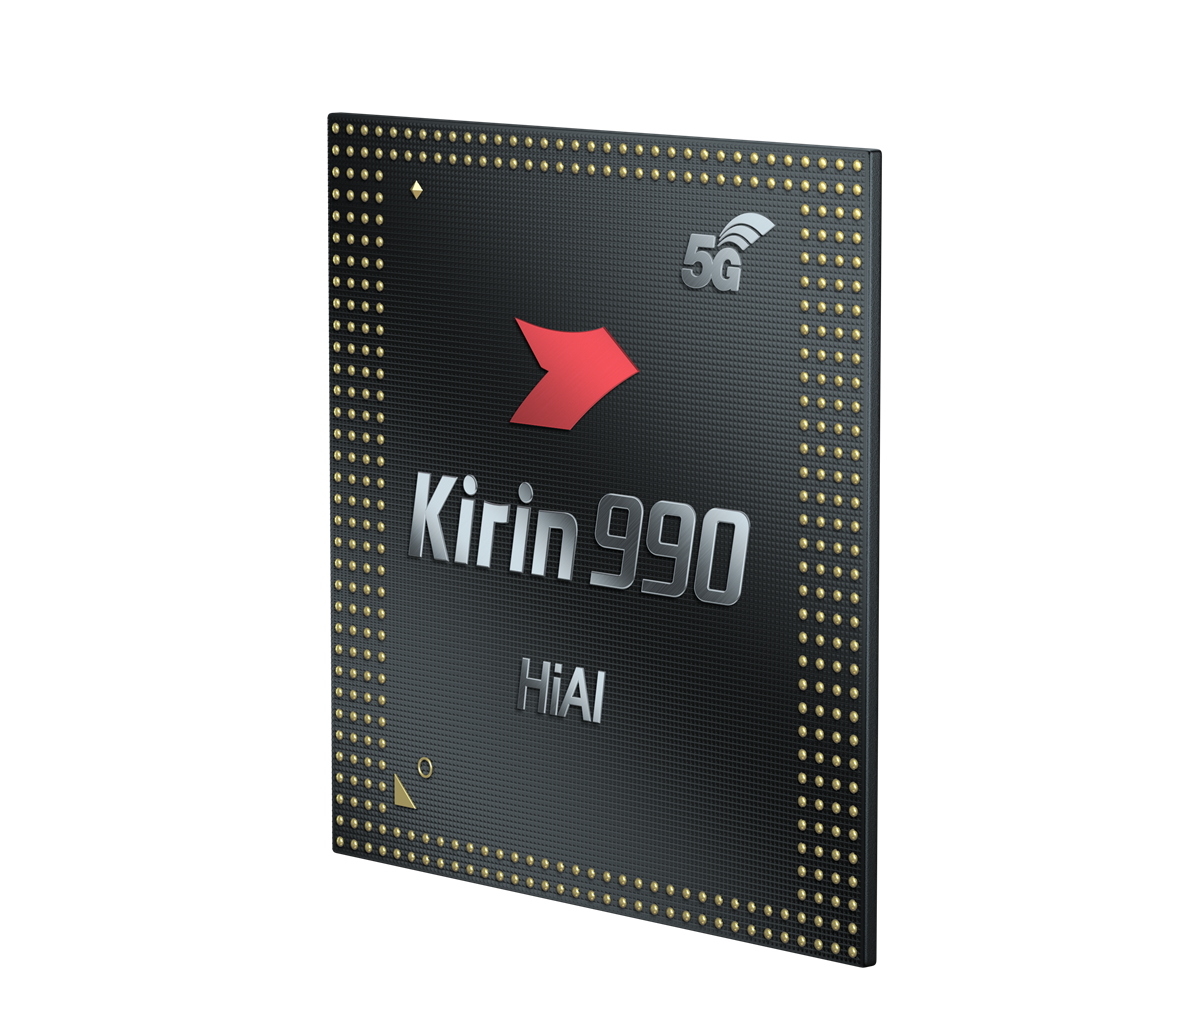 Huawei_Kirin 990 5G